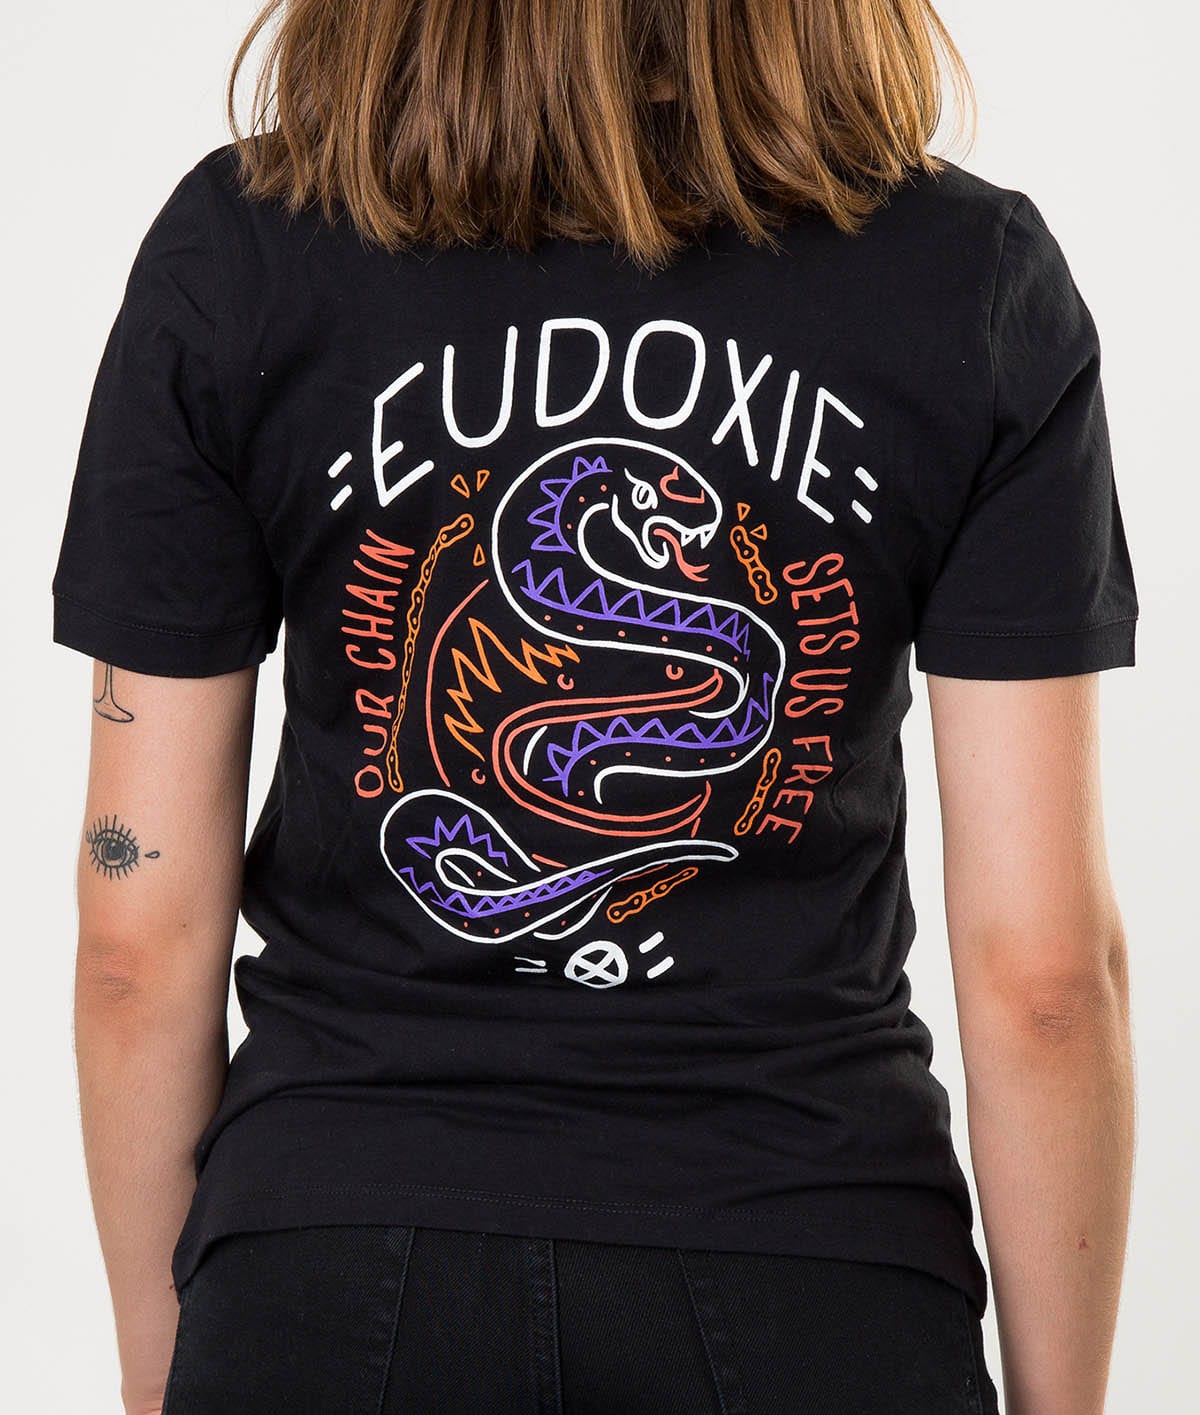 Eudoxie Black Masha T-Shirt - ExtraLarge - Bild 1